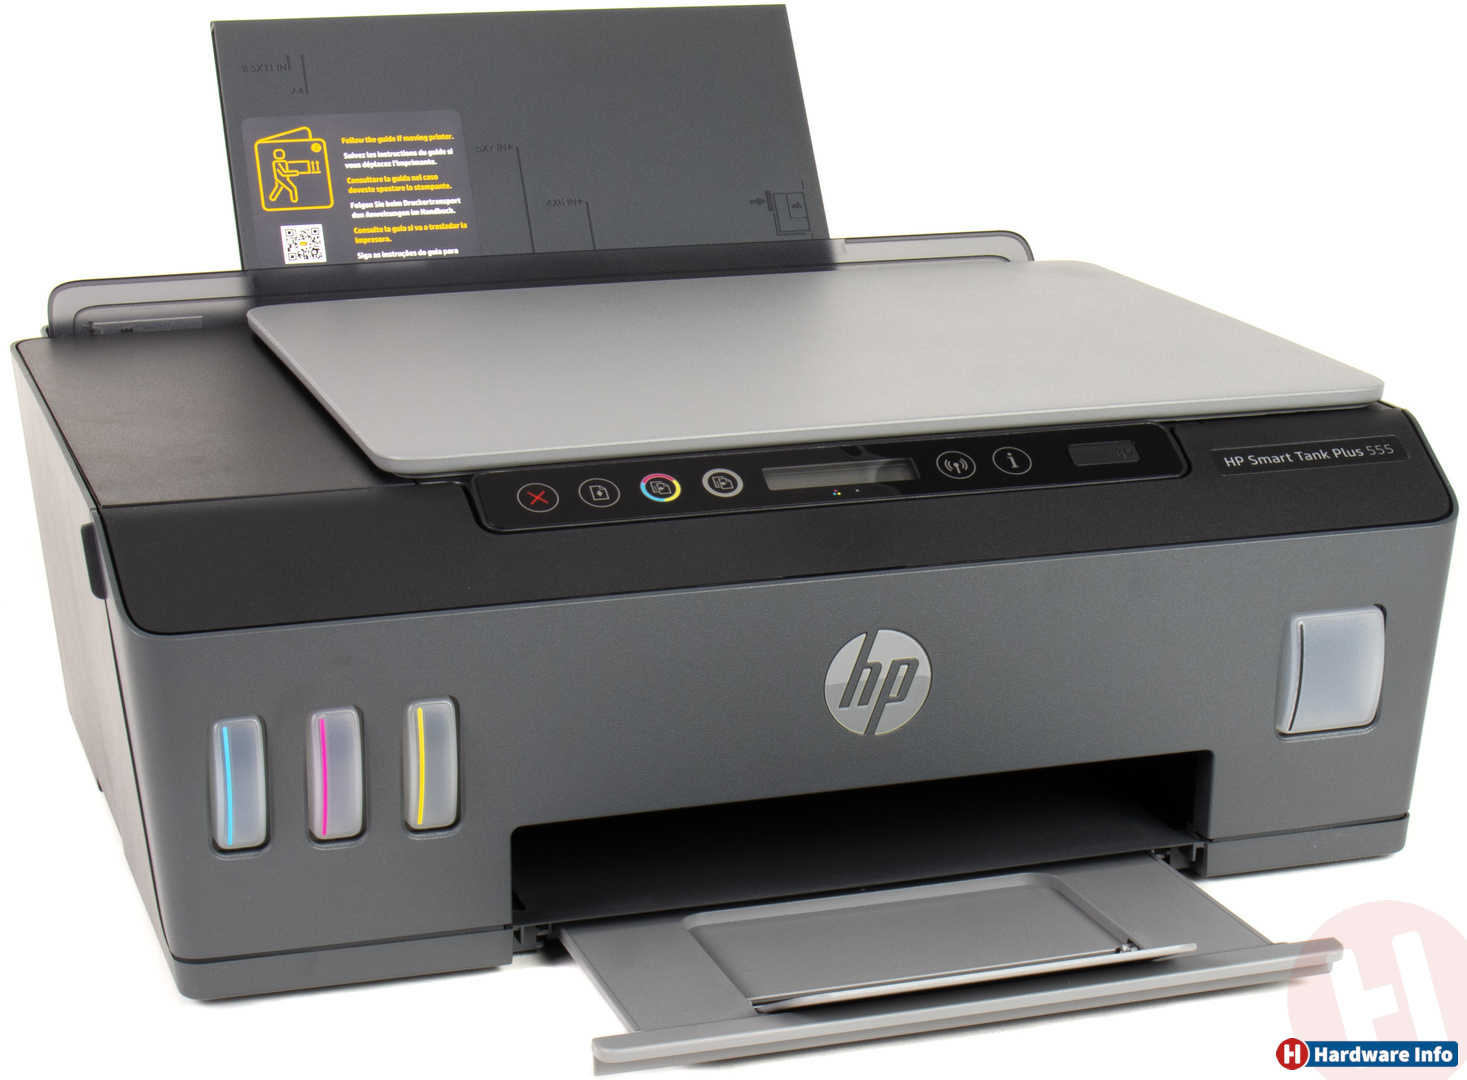 HP Smart Tank Plus 555 printer/allinone Hardware Info